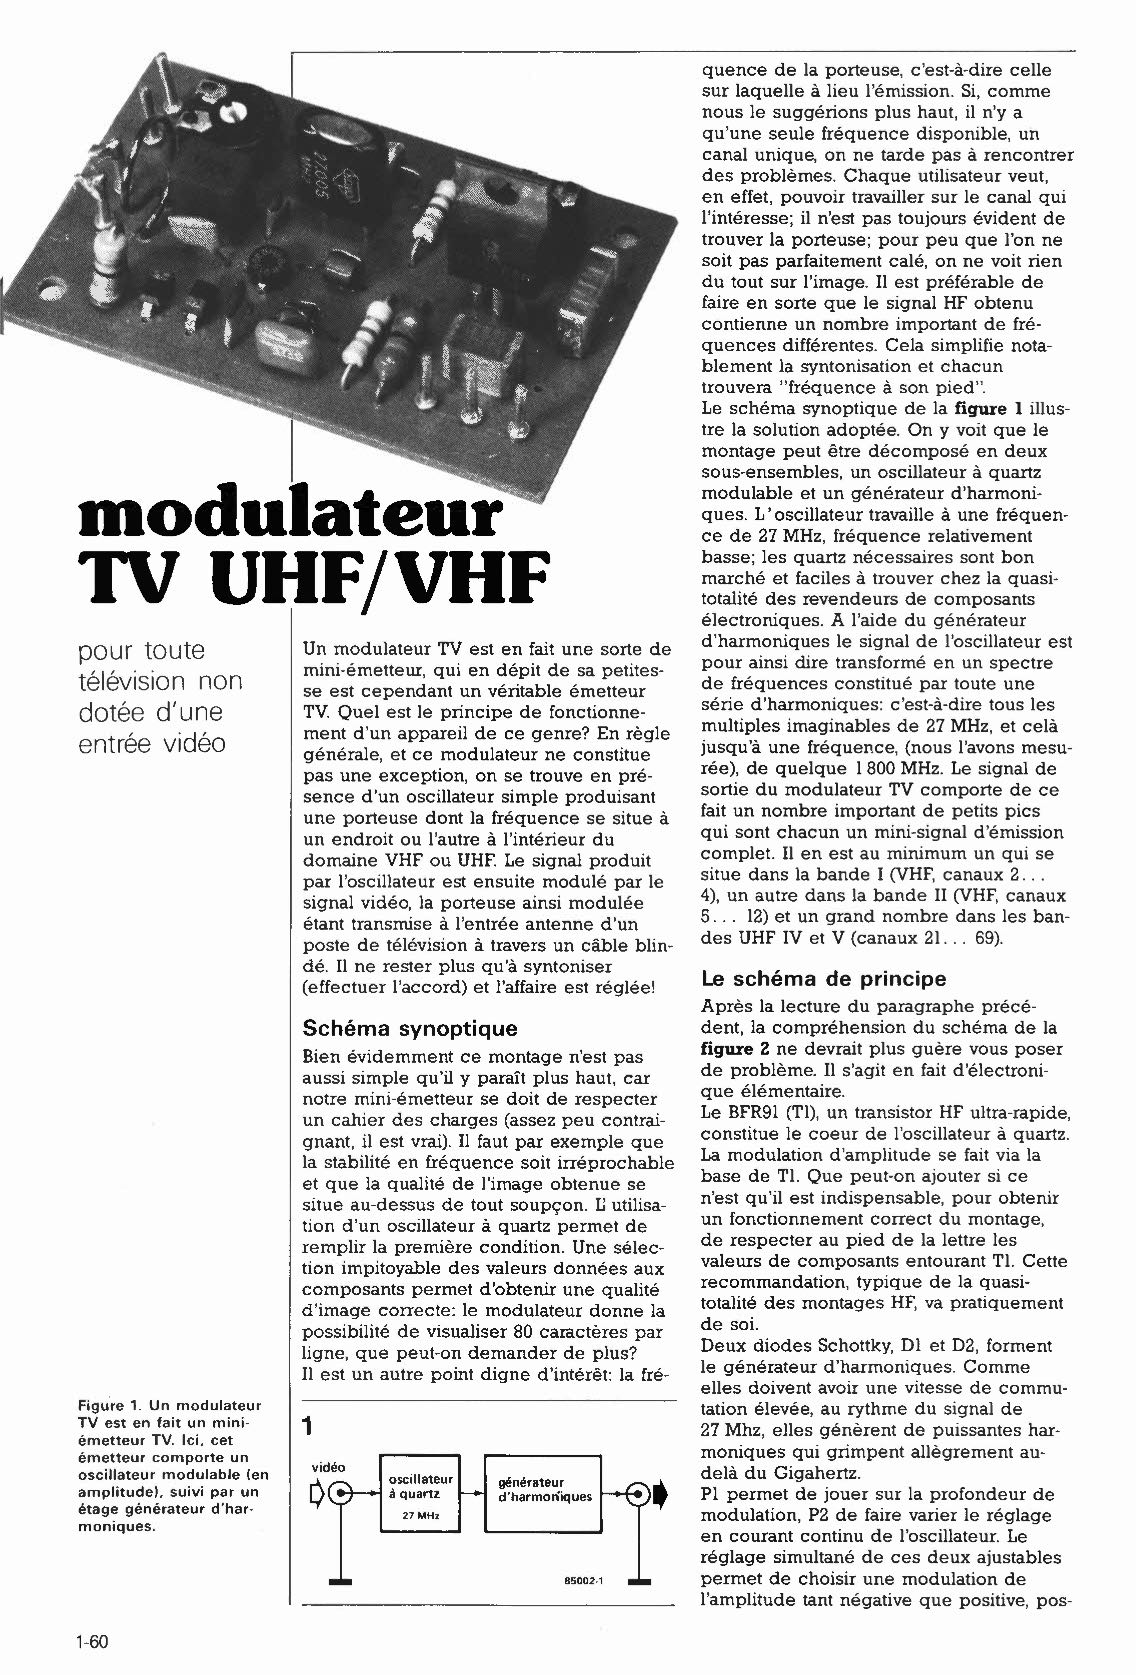 modulateur TV UHF-VHF